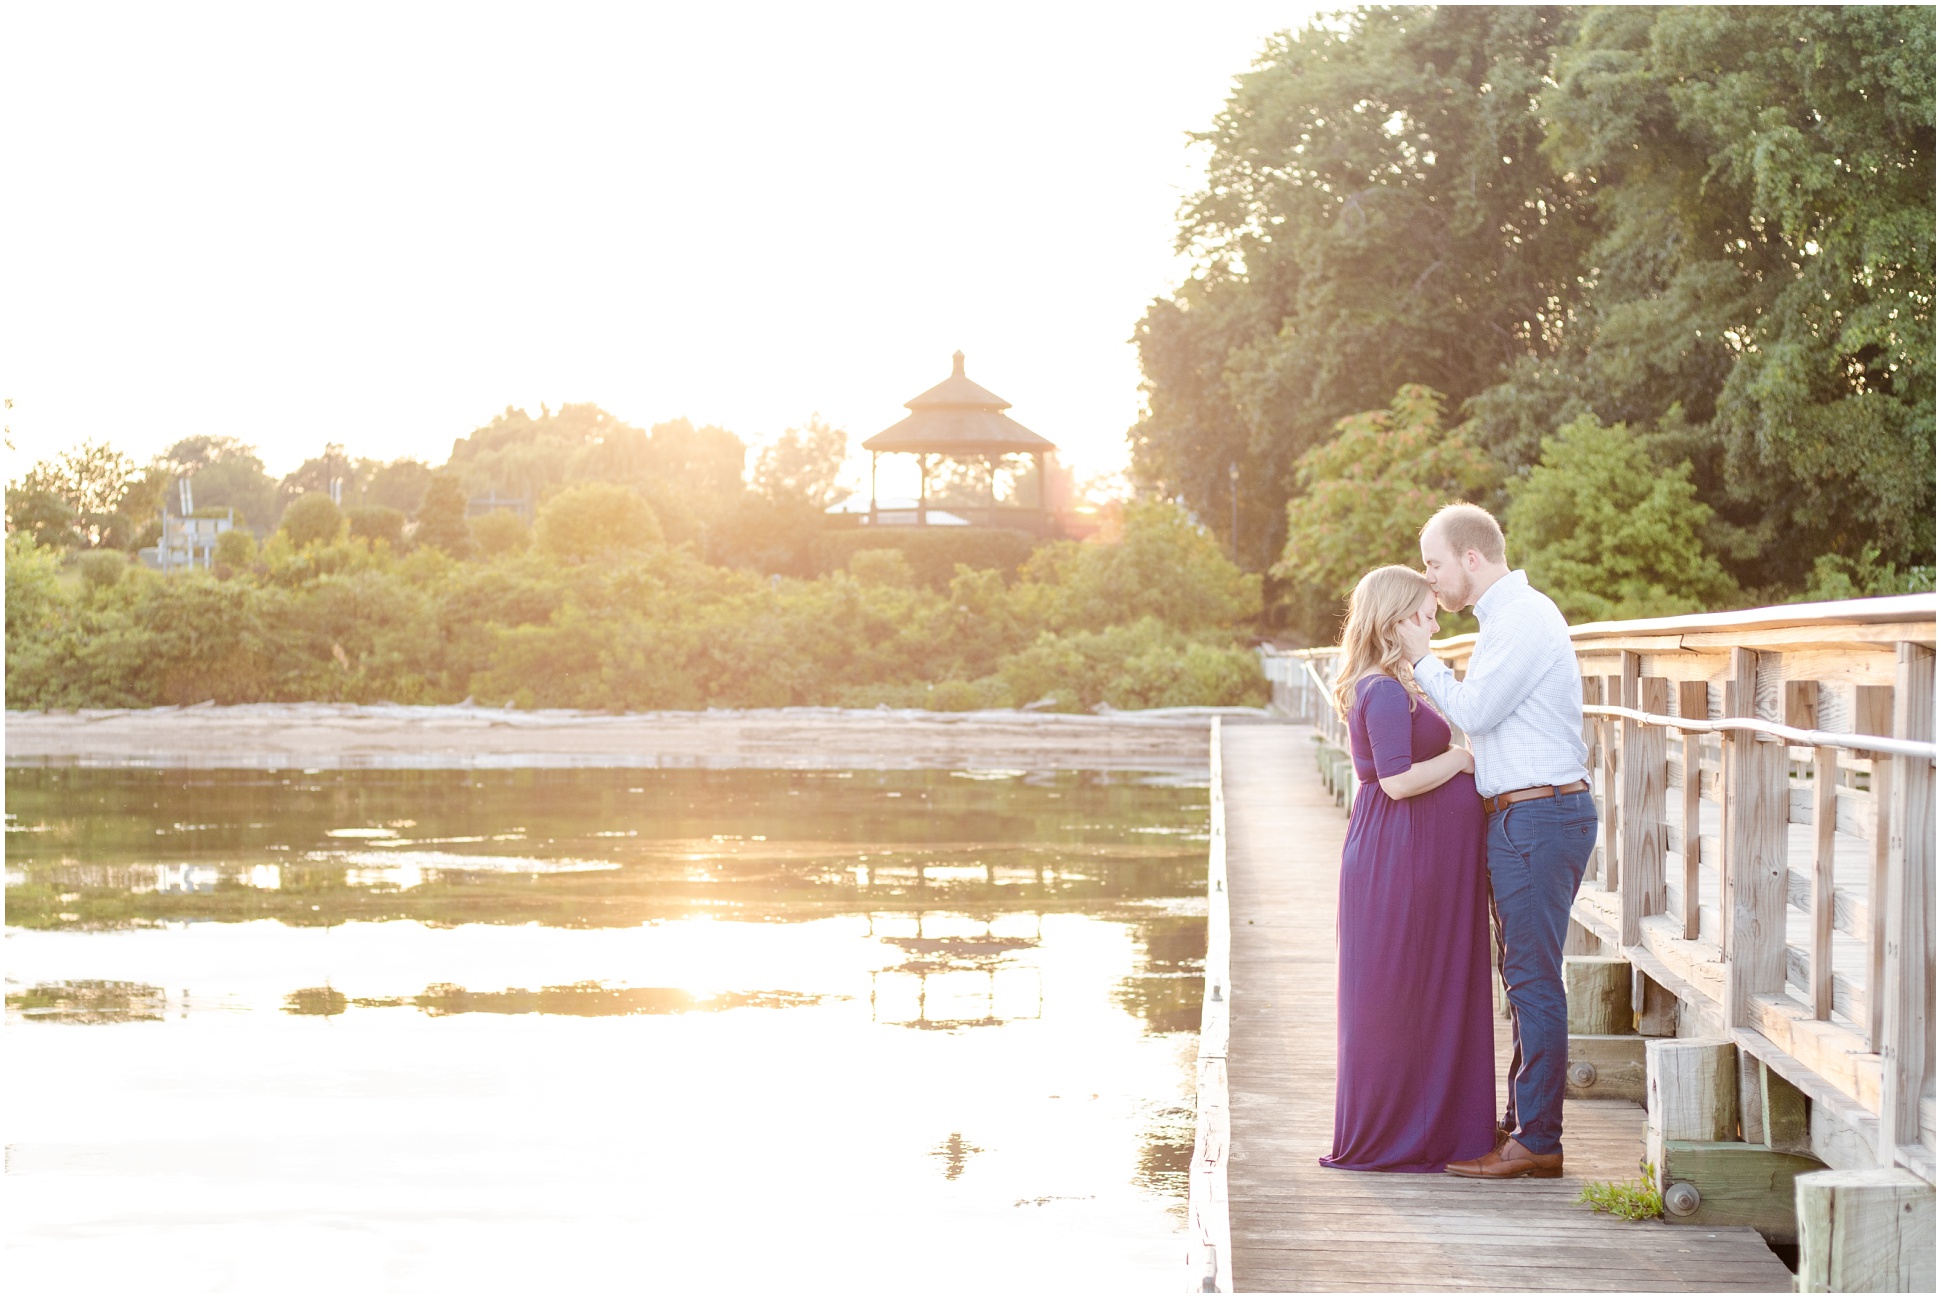 The sun setting behind the arbor on the dock of Swan Harbor Farm, as a pregnant couple kisses